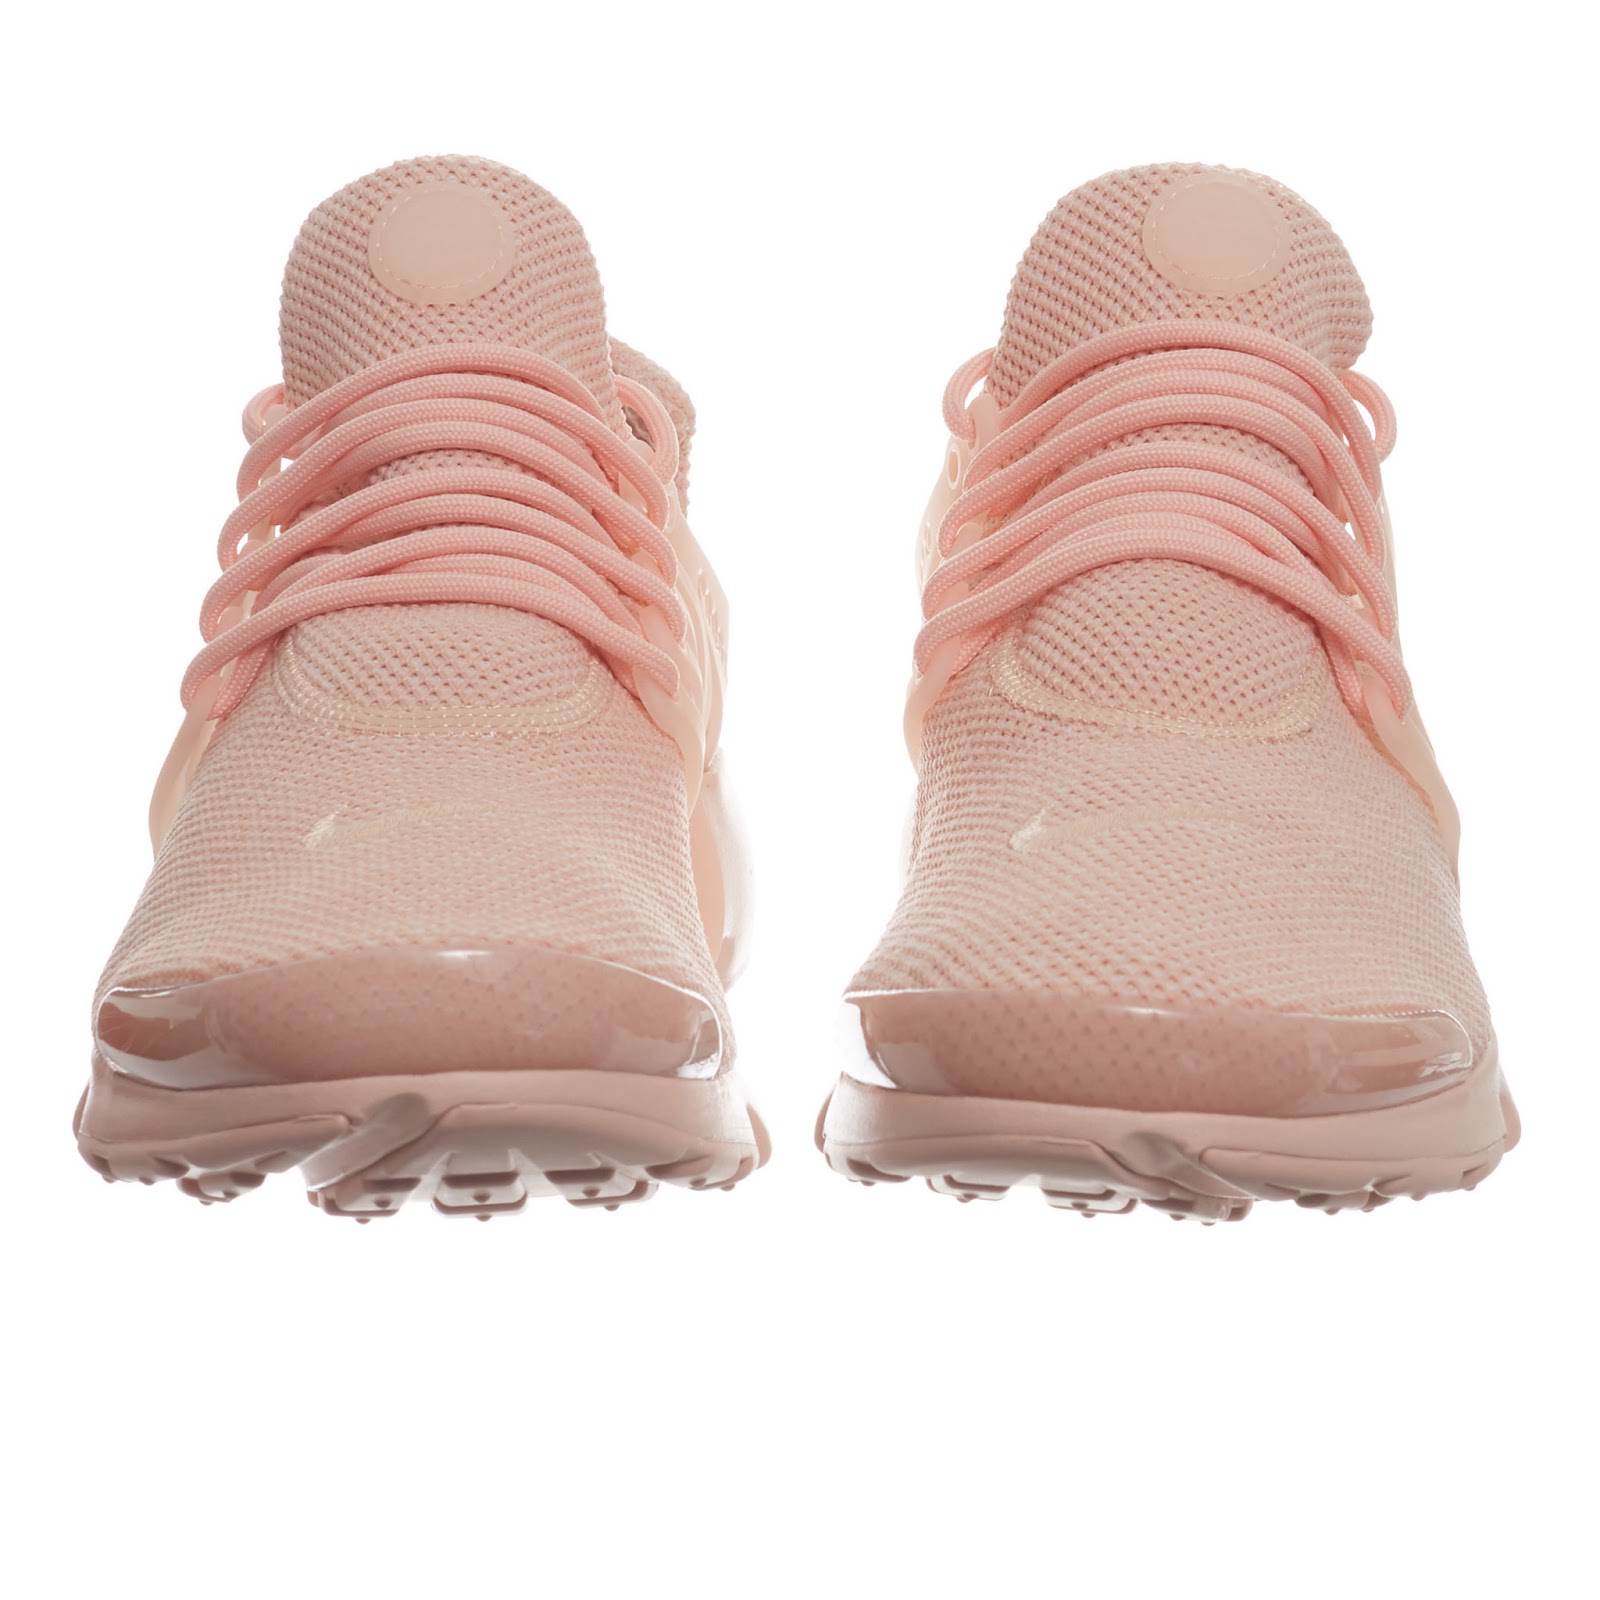 salmon nike shoes